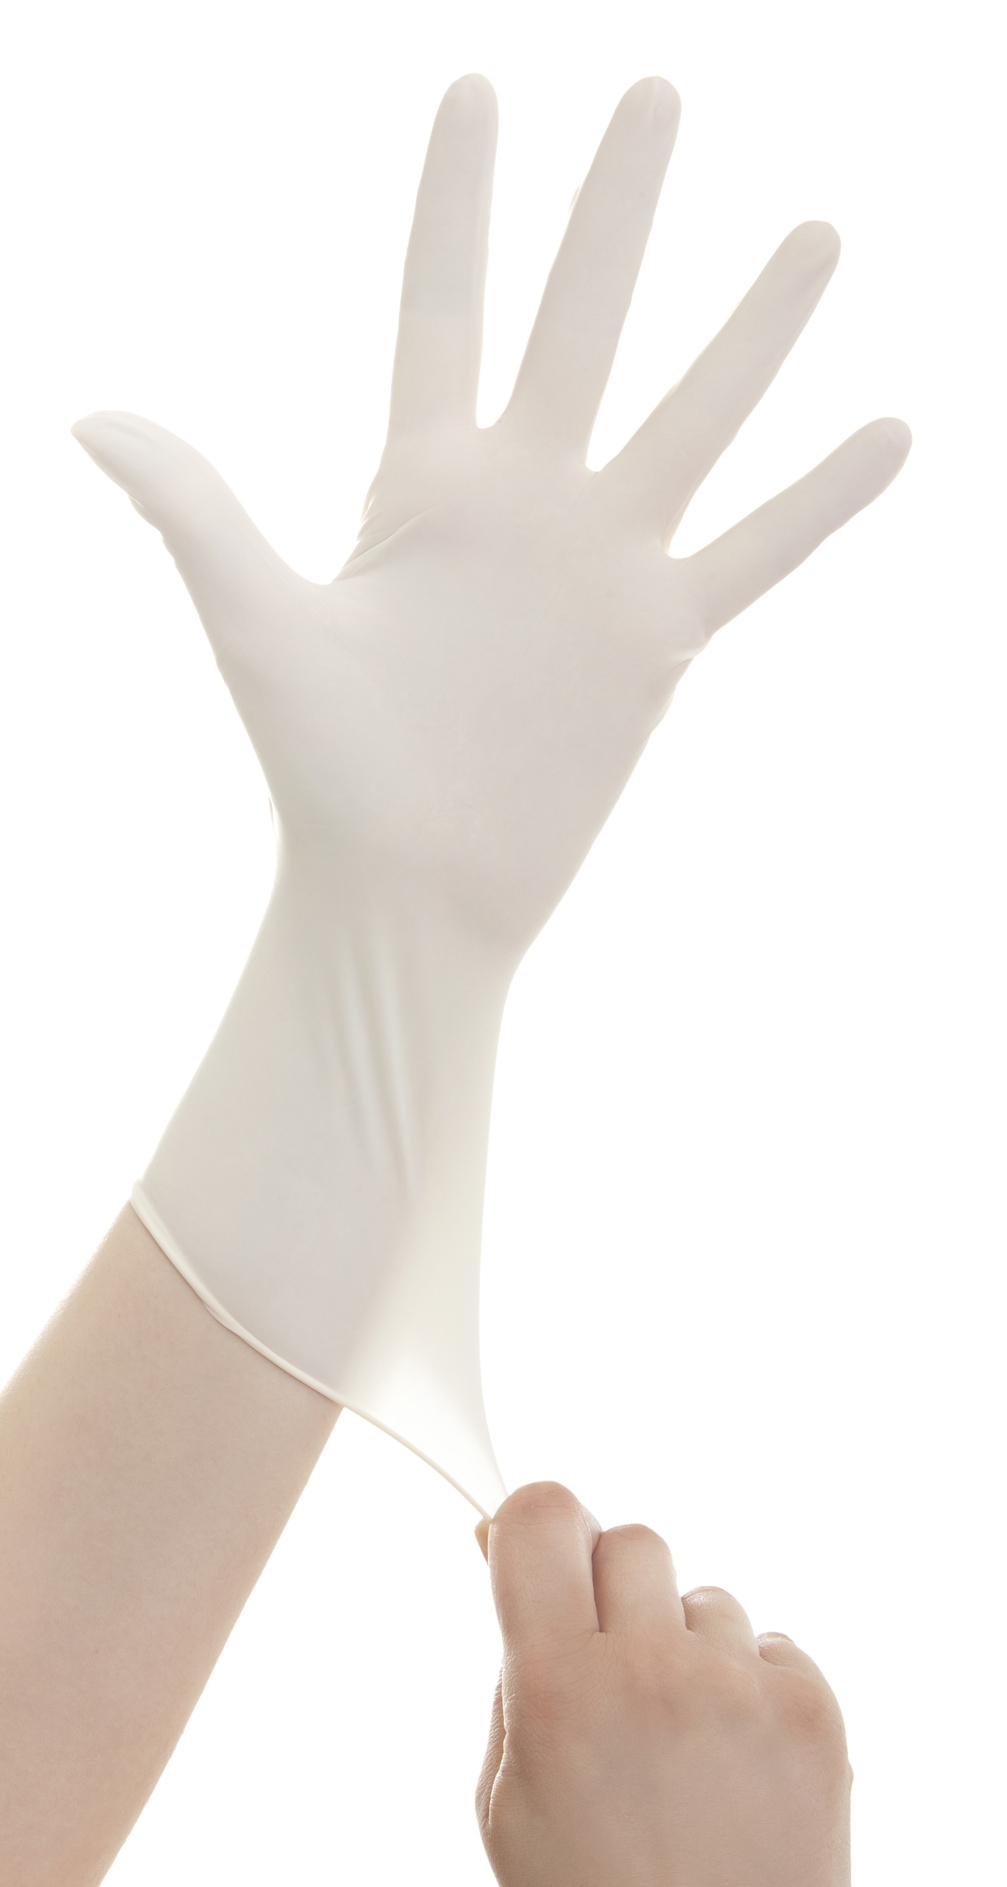 Boite de gants d'examen Latex Boite de gants Latex Jetable